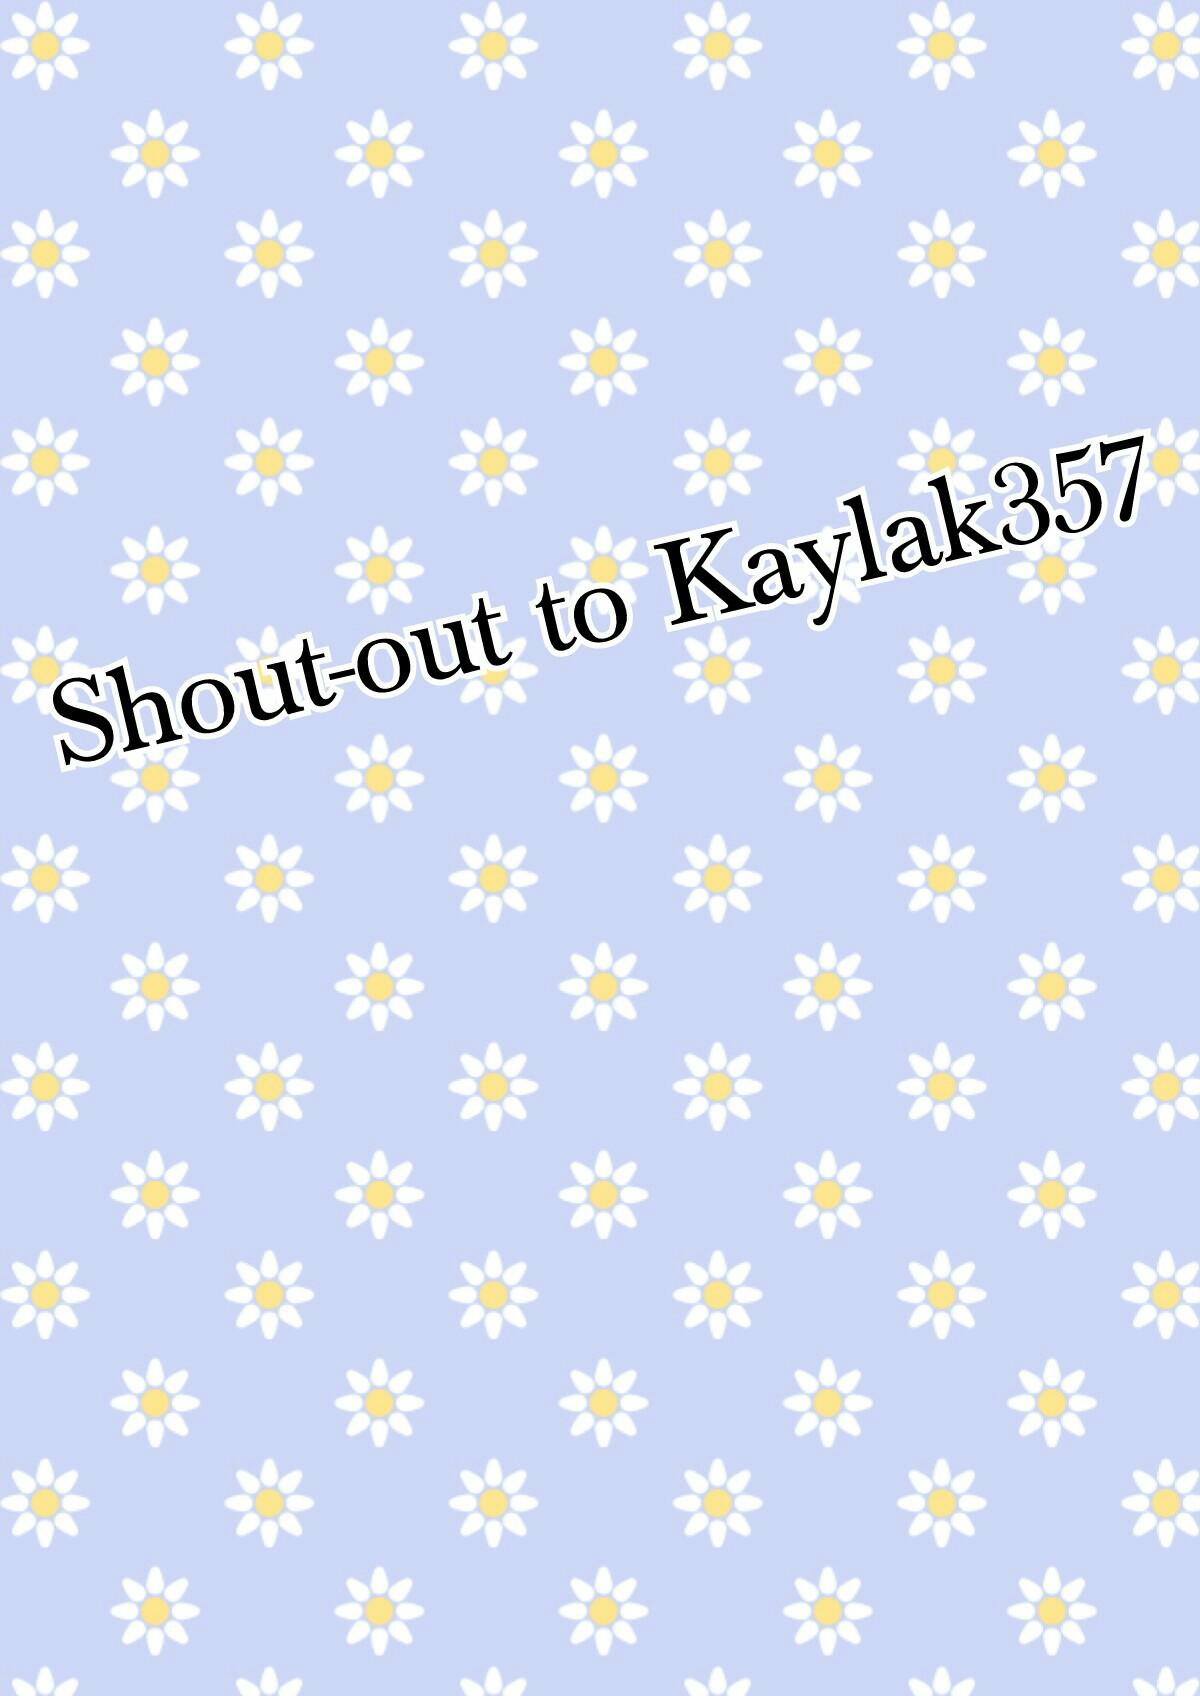 Shout-out to Kaylak357